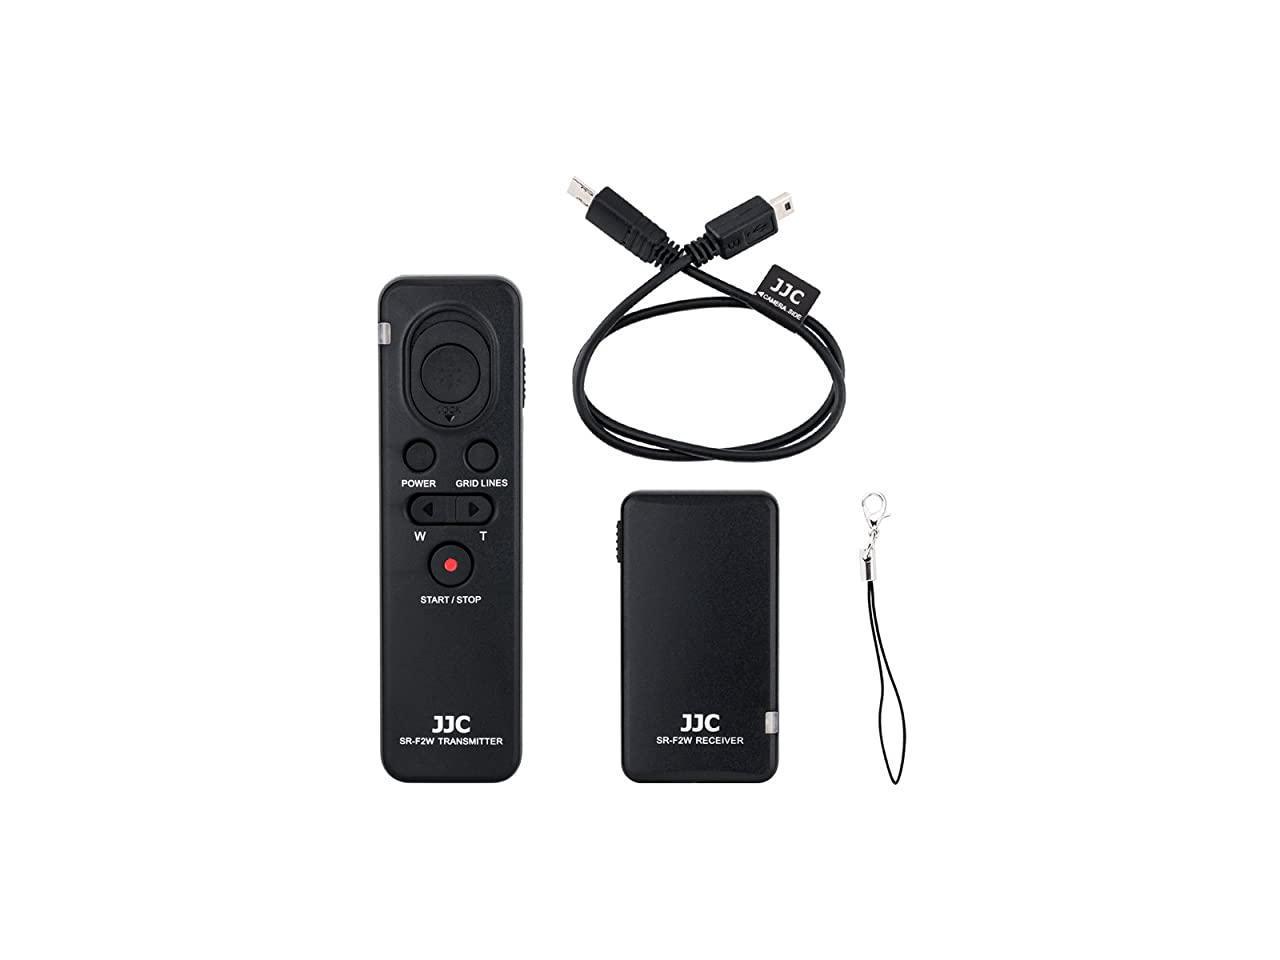 JJC RMT-VP1K Wireless Remote Control for Sony A7 III A7R III A7S II A9 A6000 A6300 A6400 A6500 RX100 Sony FDR-AX33 AX53 AX100 AX700 HDR-CX405 CX440 CX455 CX675 CX240 CX900 and More Sony  Camera & Camcorder